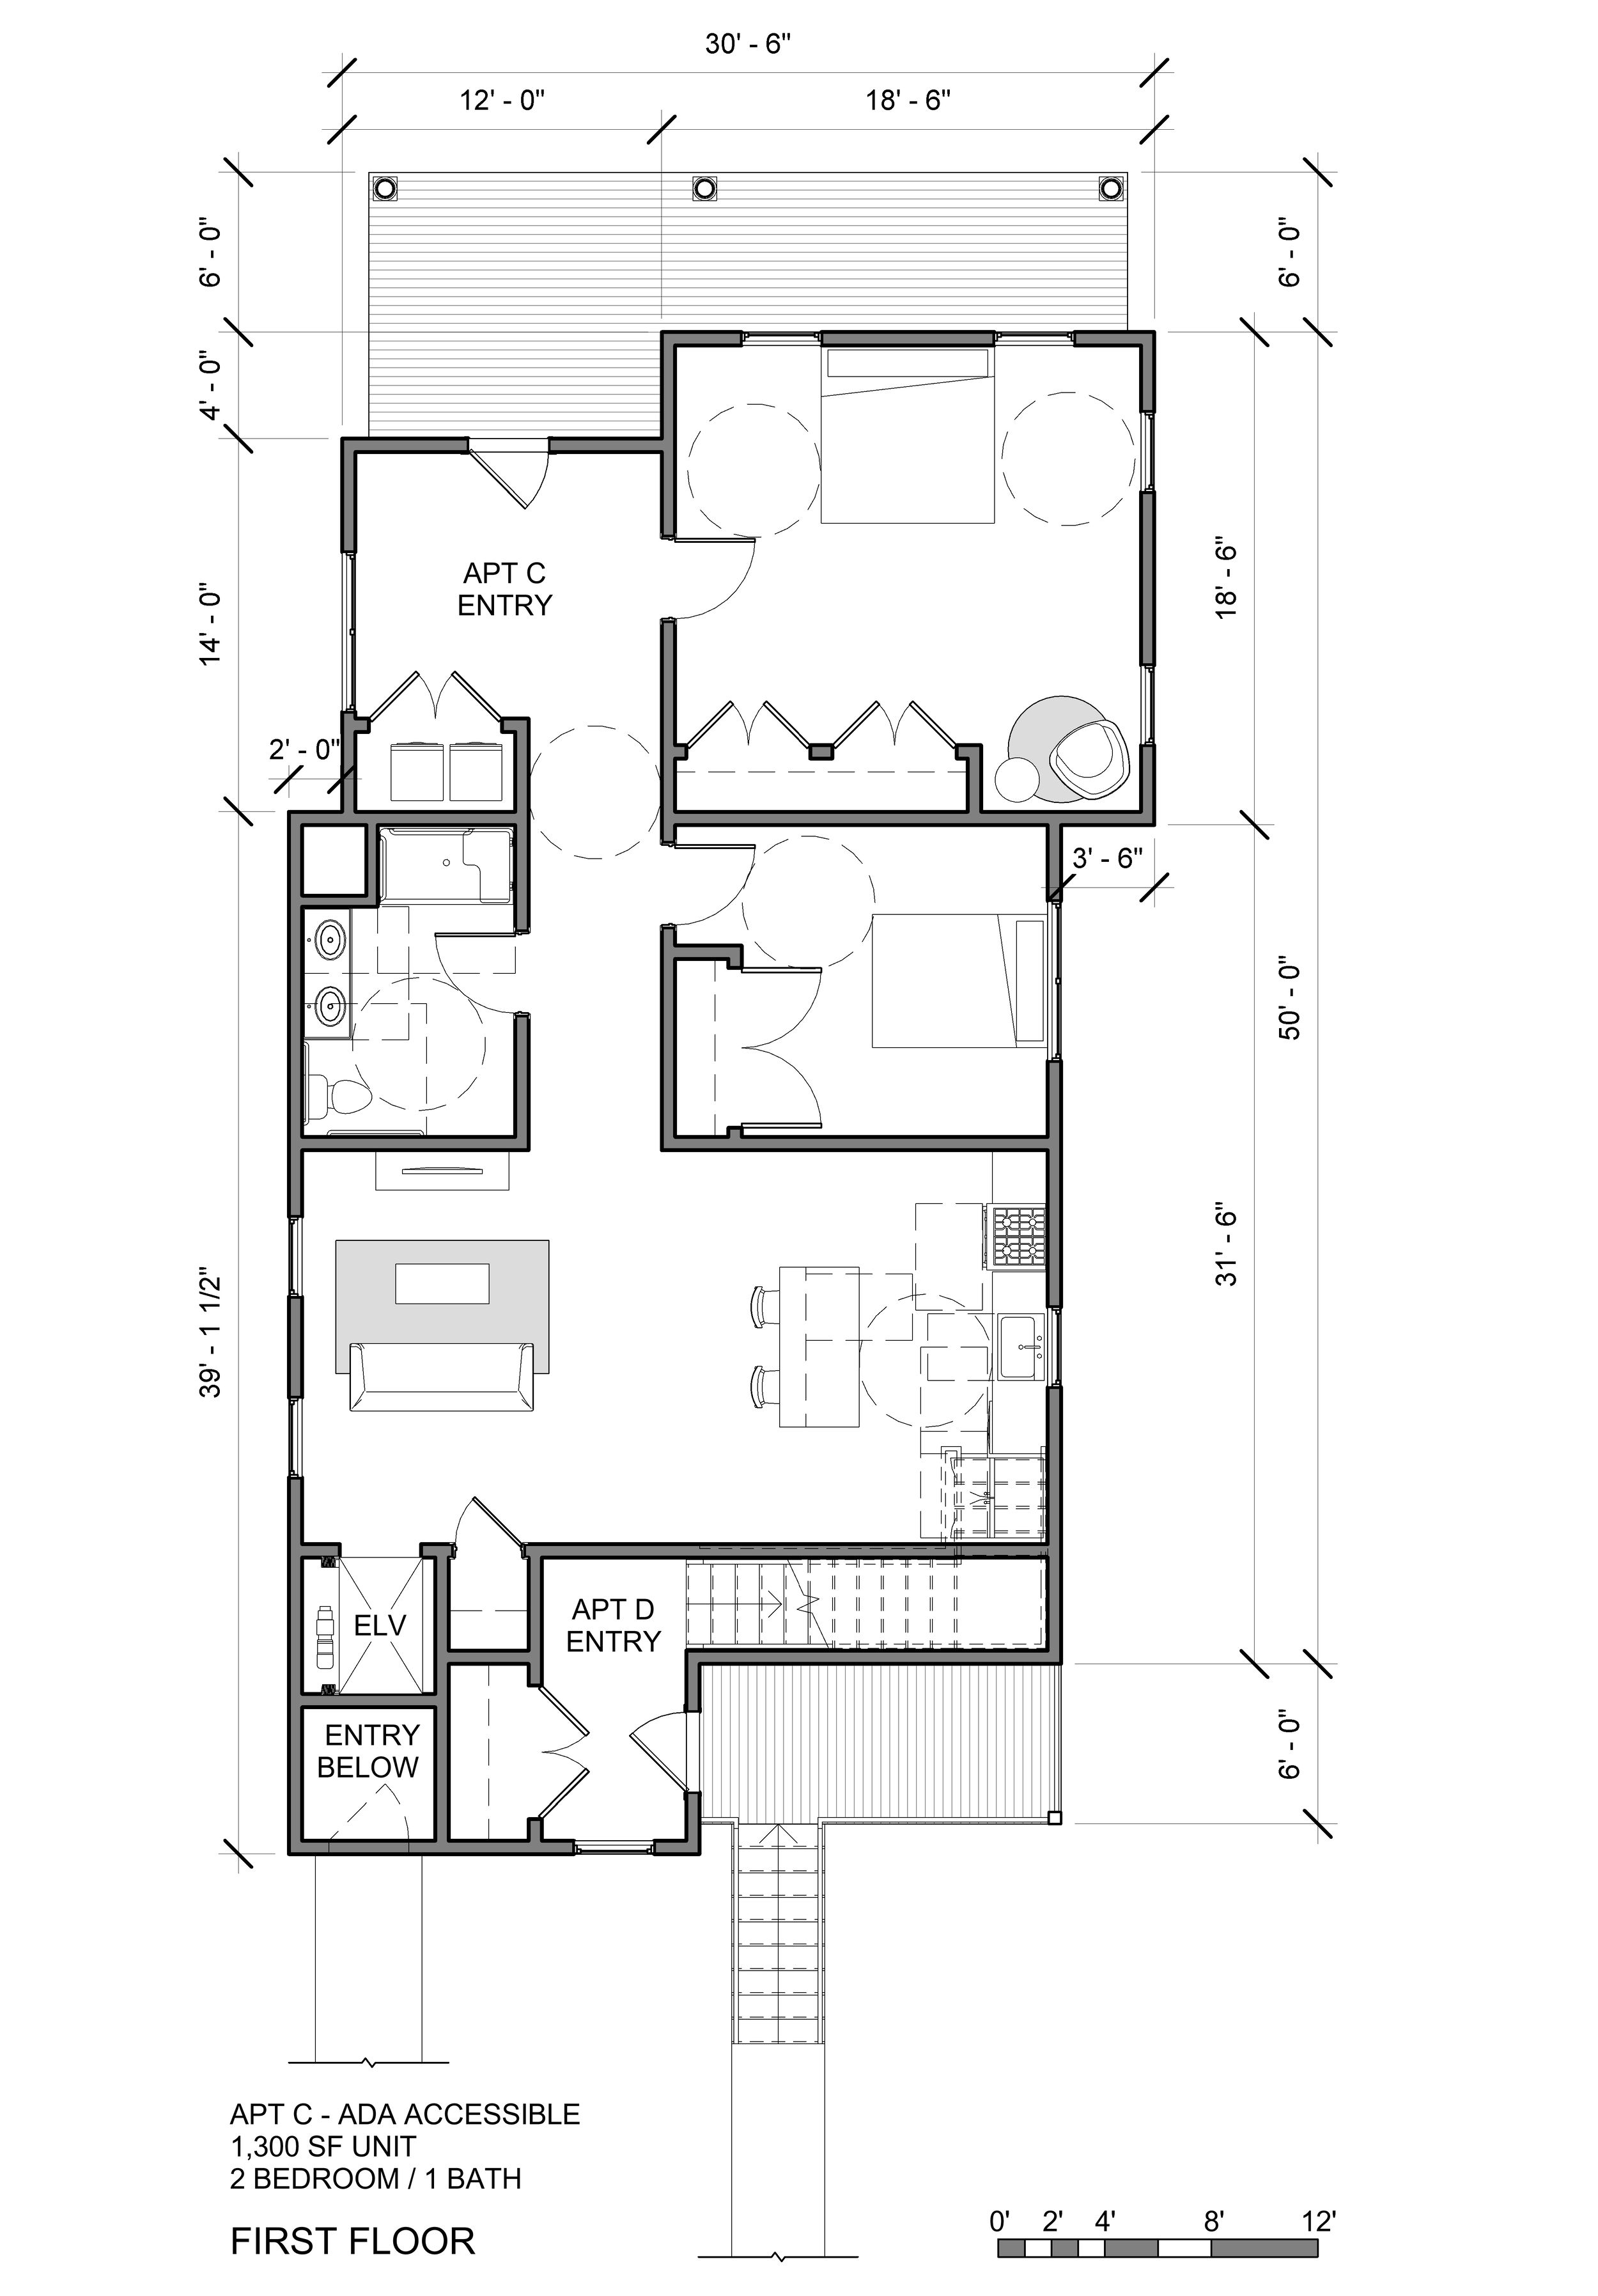 2021-05-14 BRILC Concept Plans - Floor Plan - PATTERSON AVE - FIRST FLOOR - SCHEMATIC.png